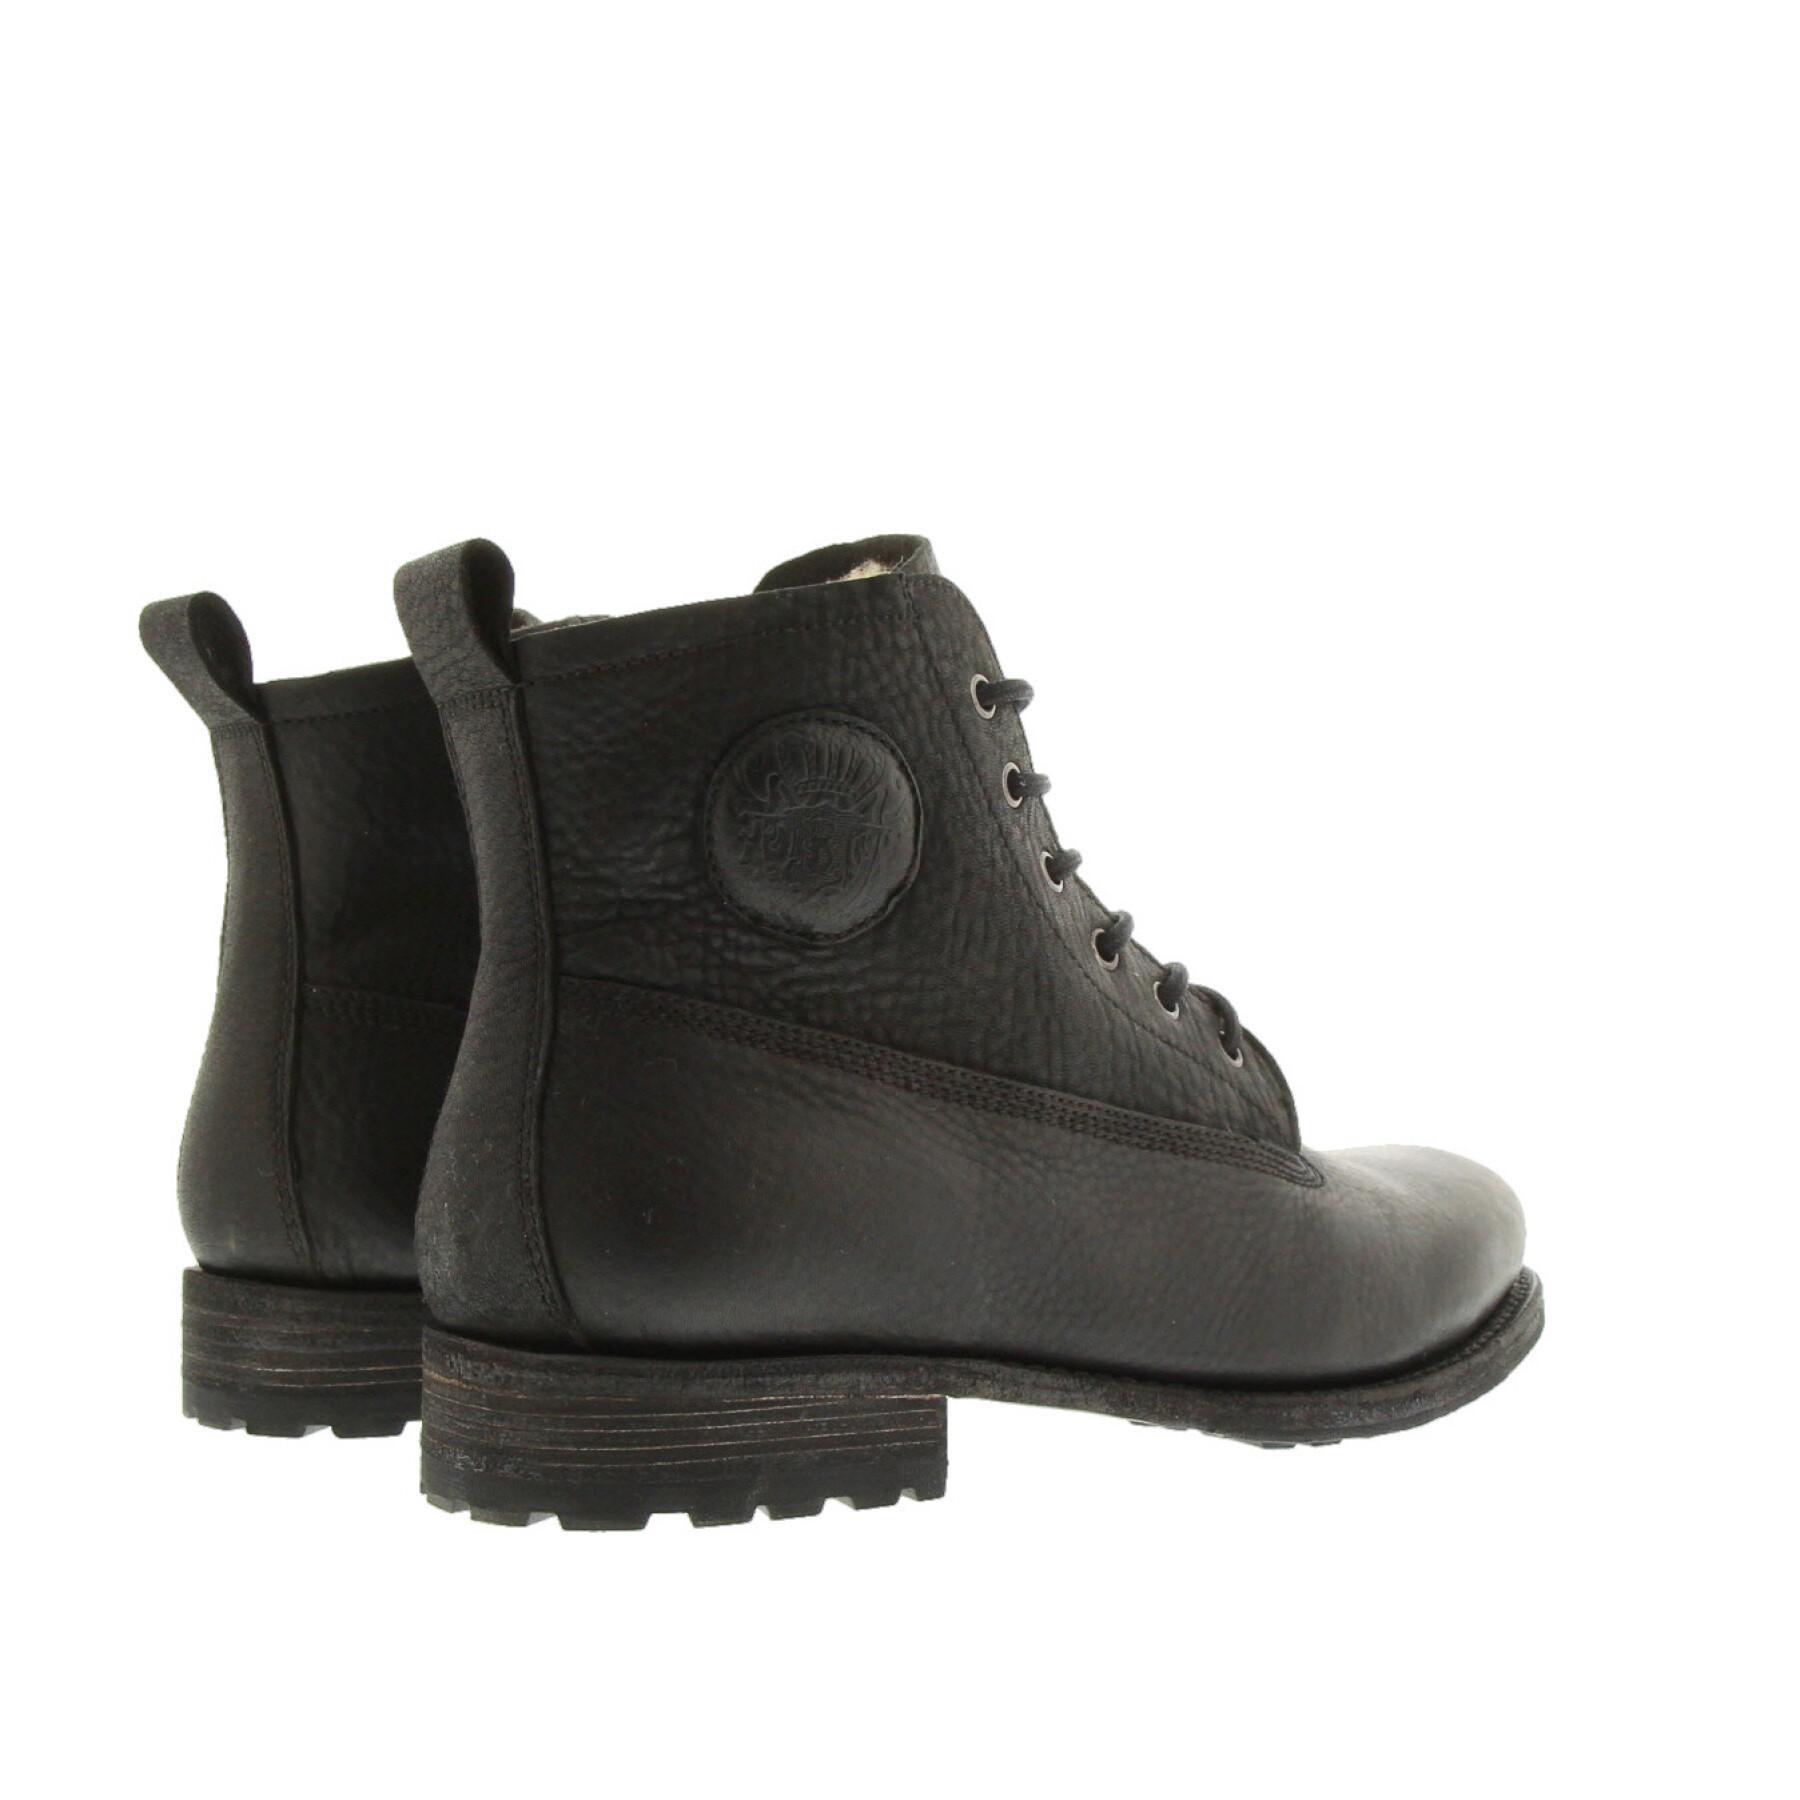 Zapatillas Blackstone Lace Up Boots - Fur